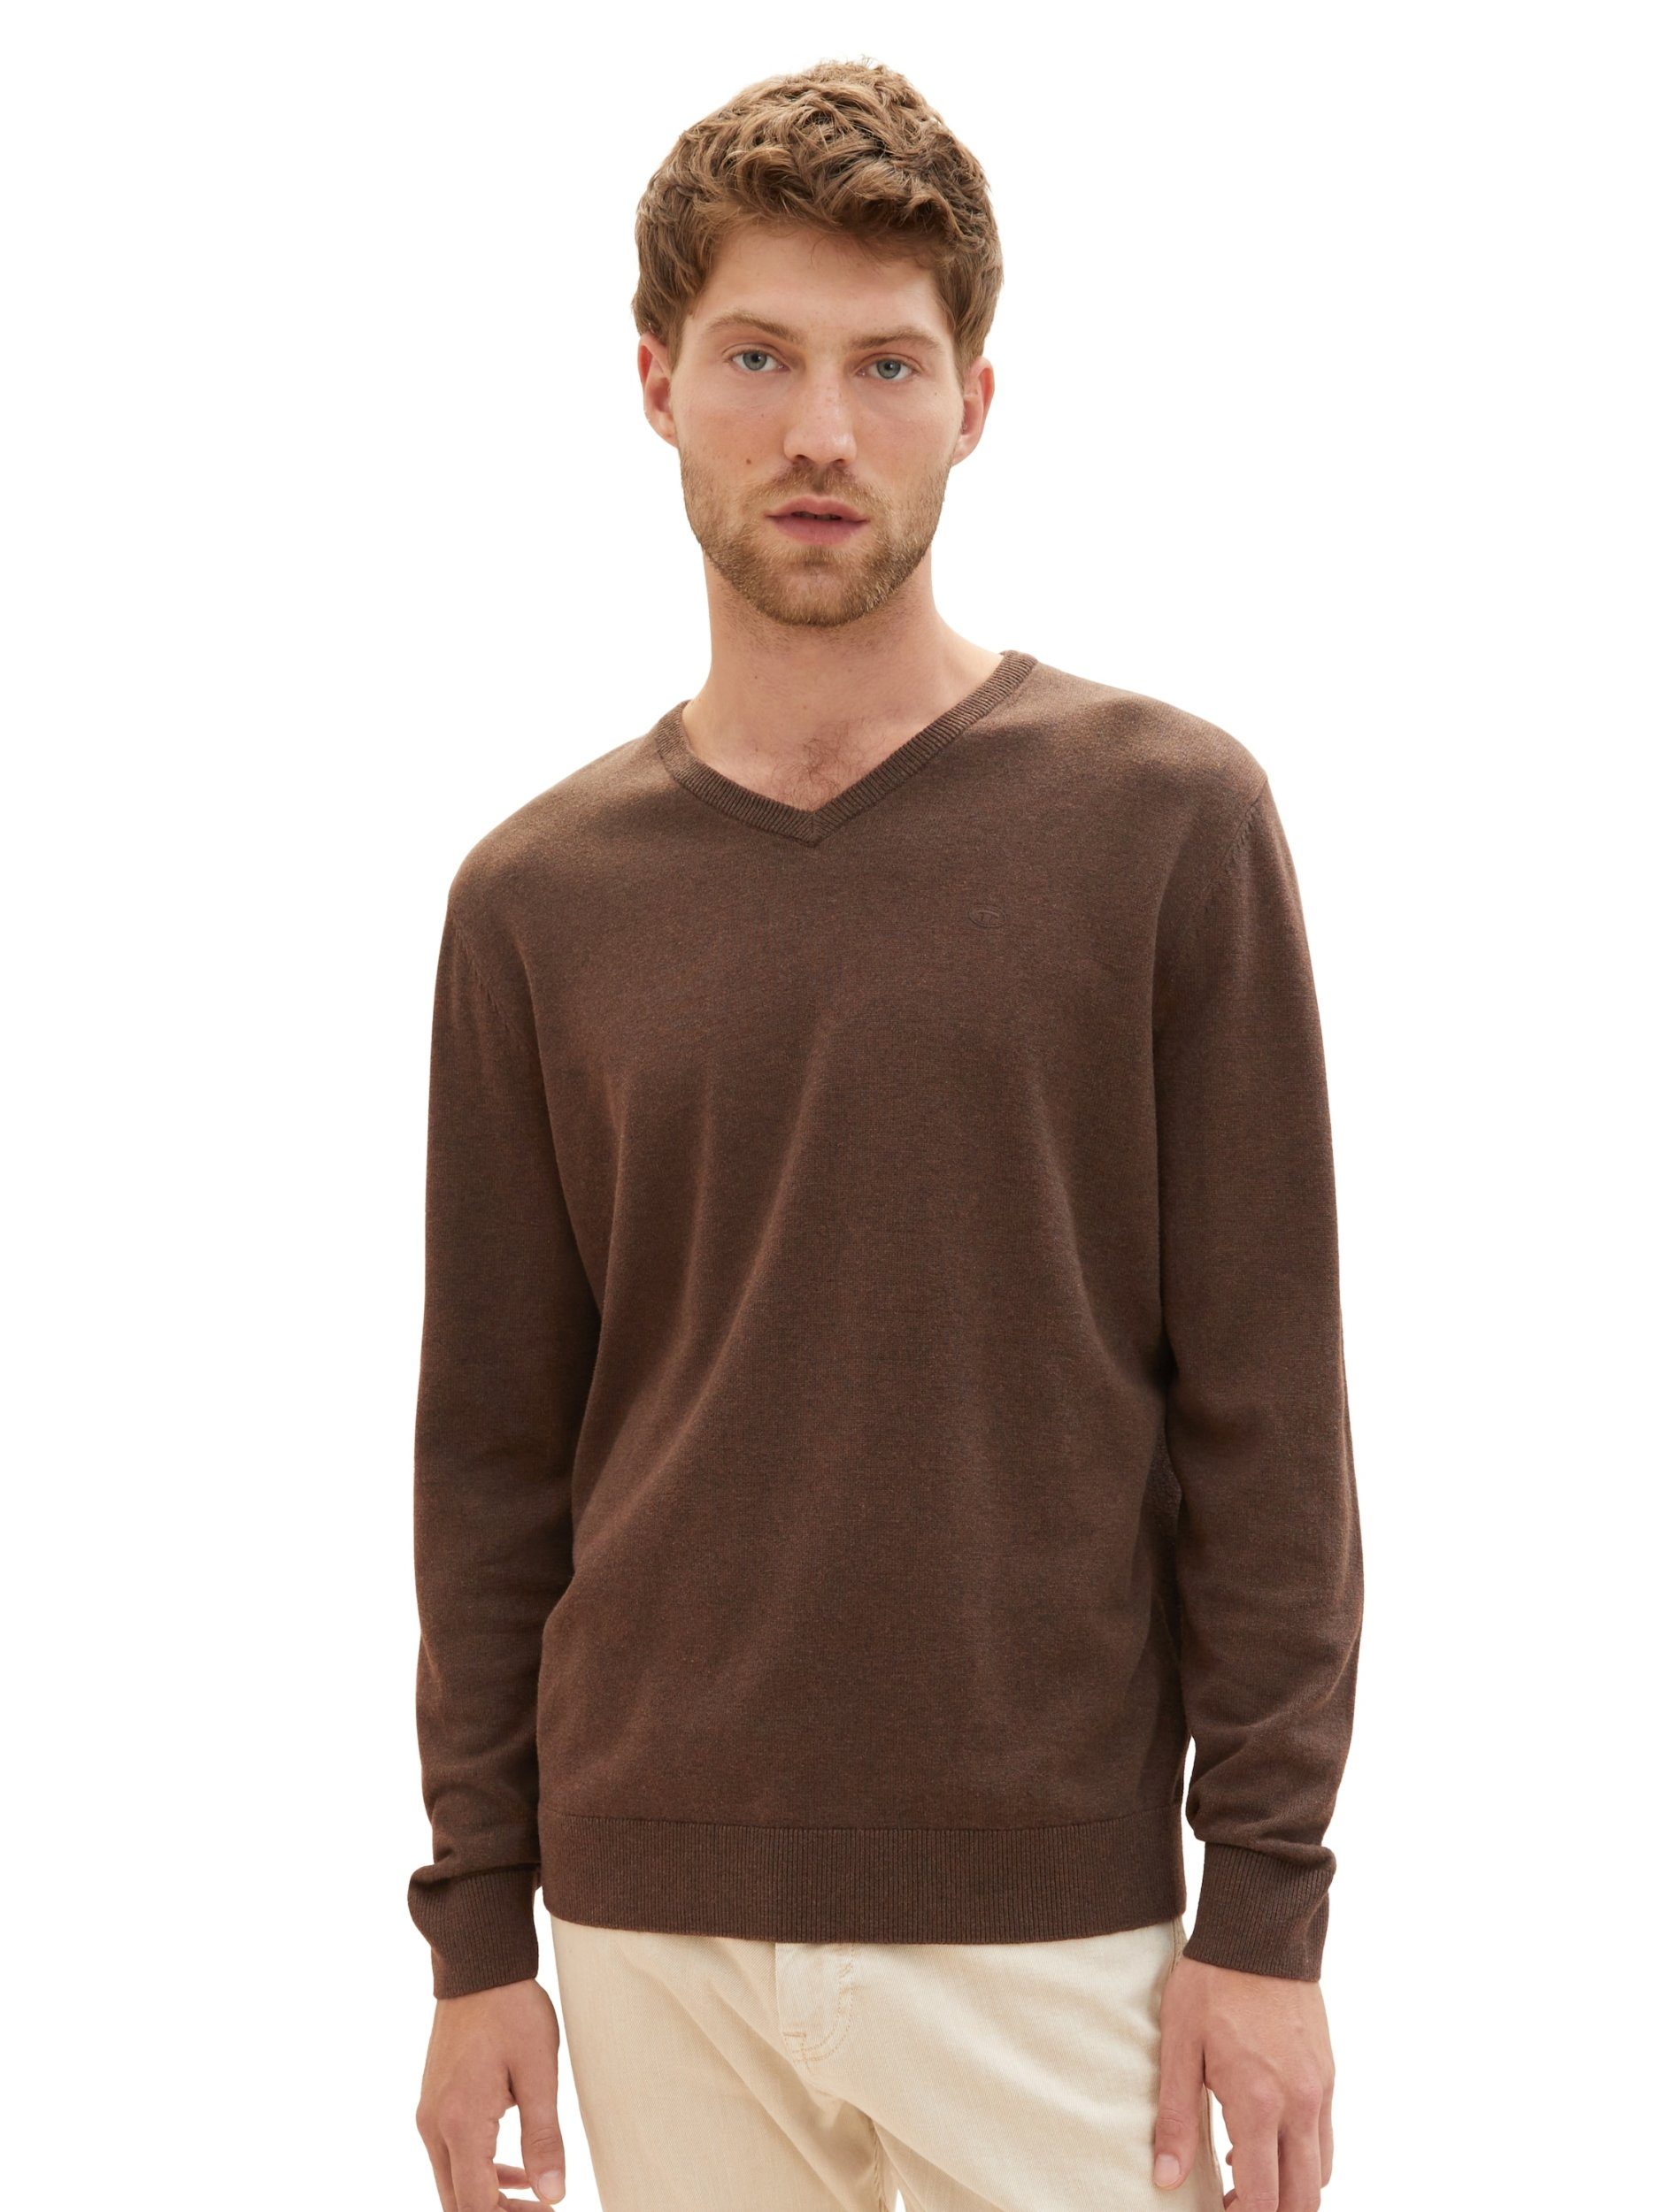 Strickpullover TOM basic TAILOR v-neck 32717 sweater